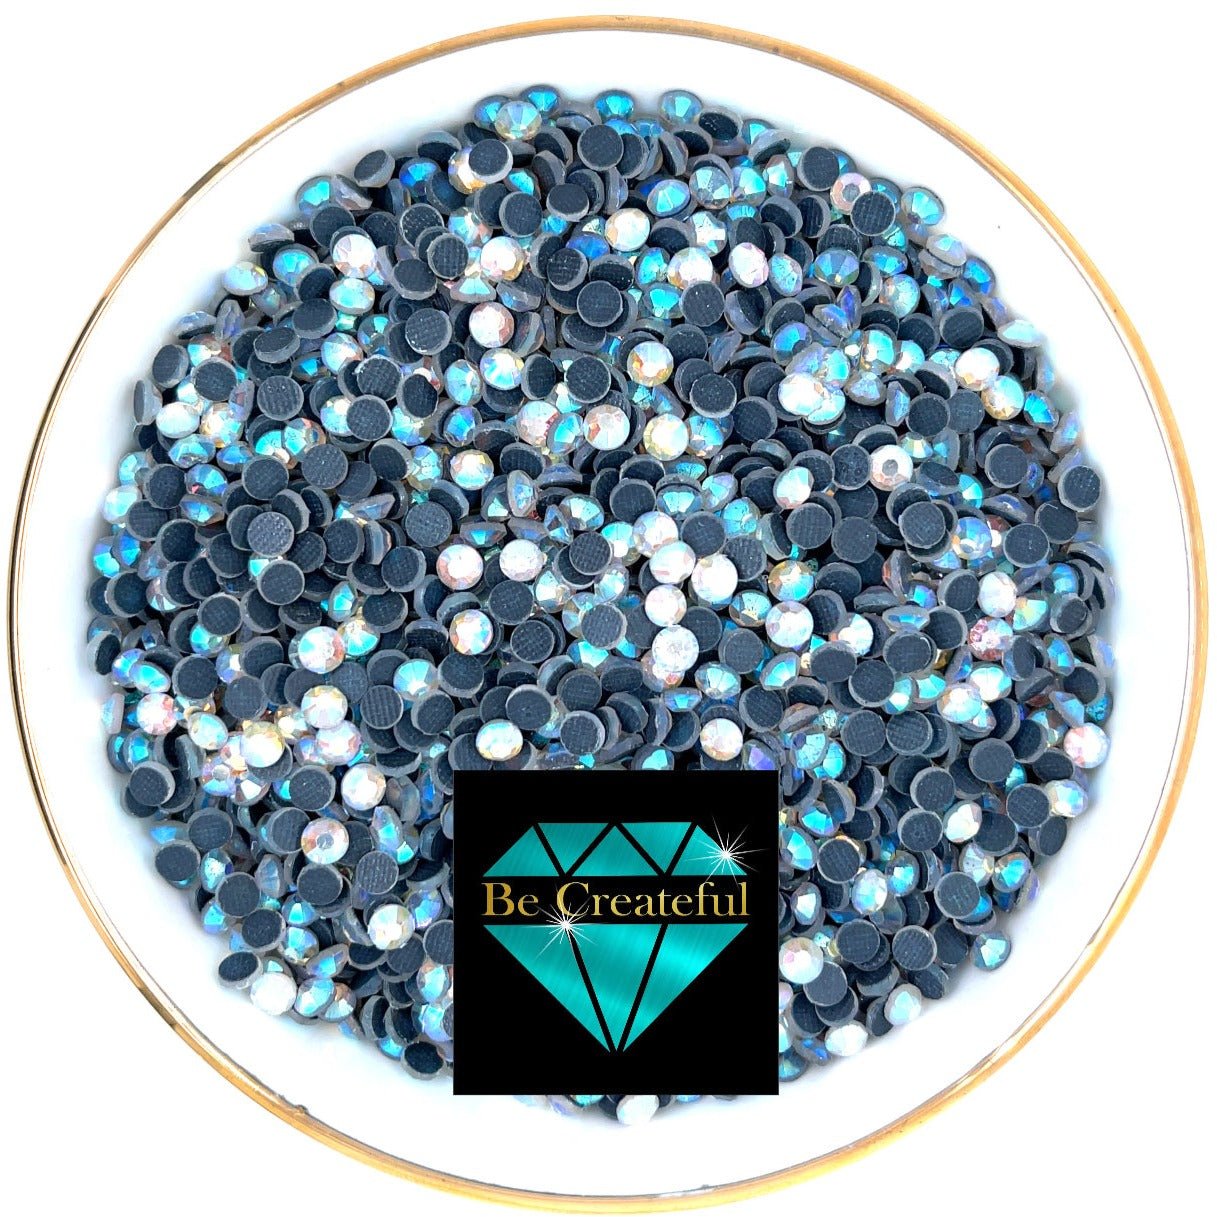 DMC Crystal AB Glass Hotfix Rhinestones - Be Createful, Beautiful Rhinestones at wholesale prices.